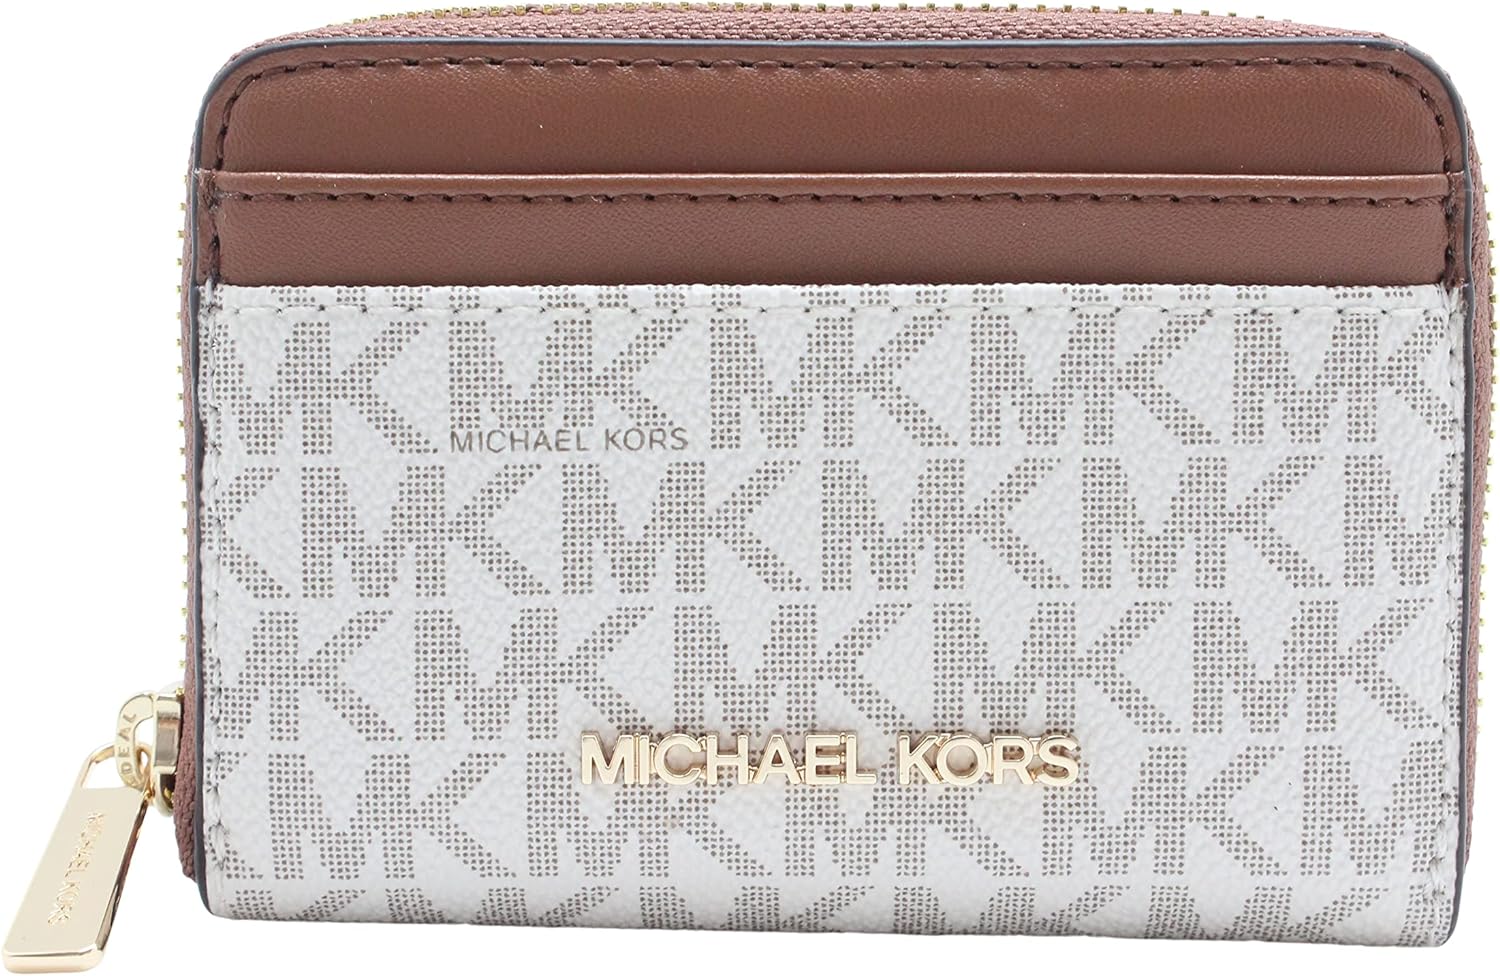 Michael Kors Women's Card Case Wallet, Vanilla, Small $50